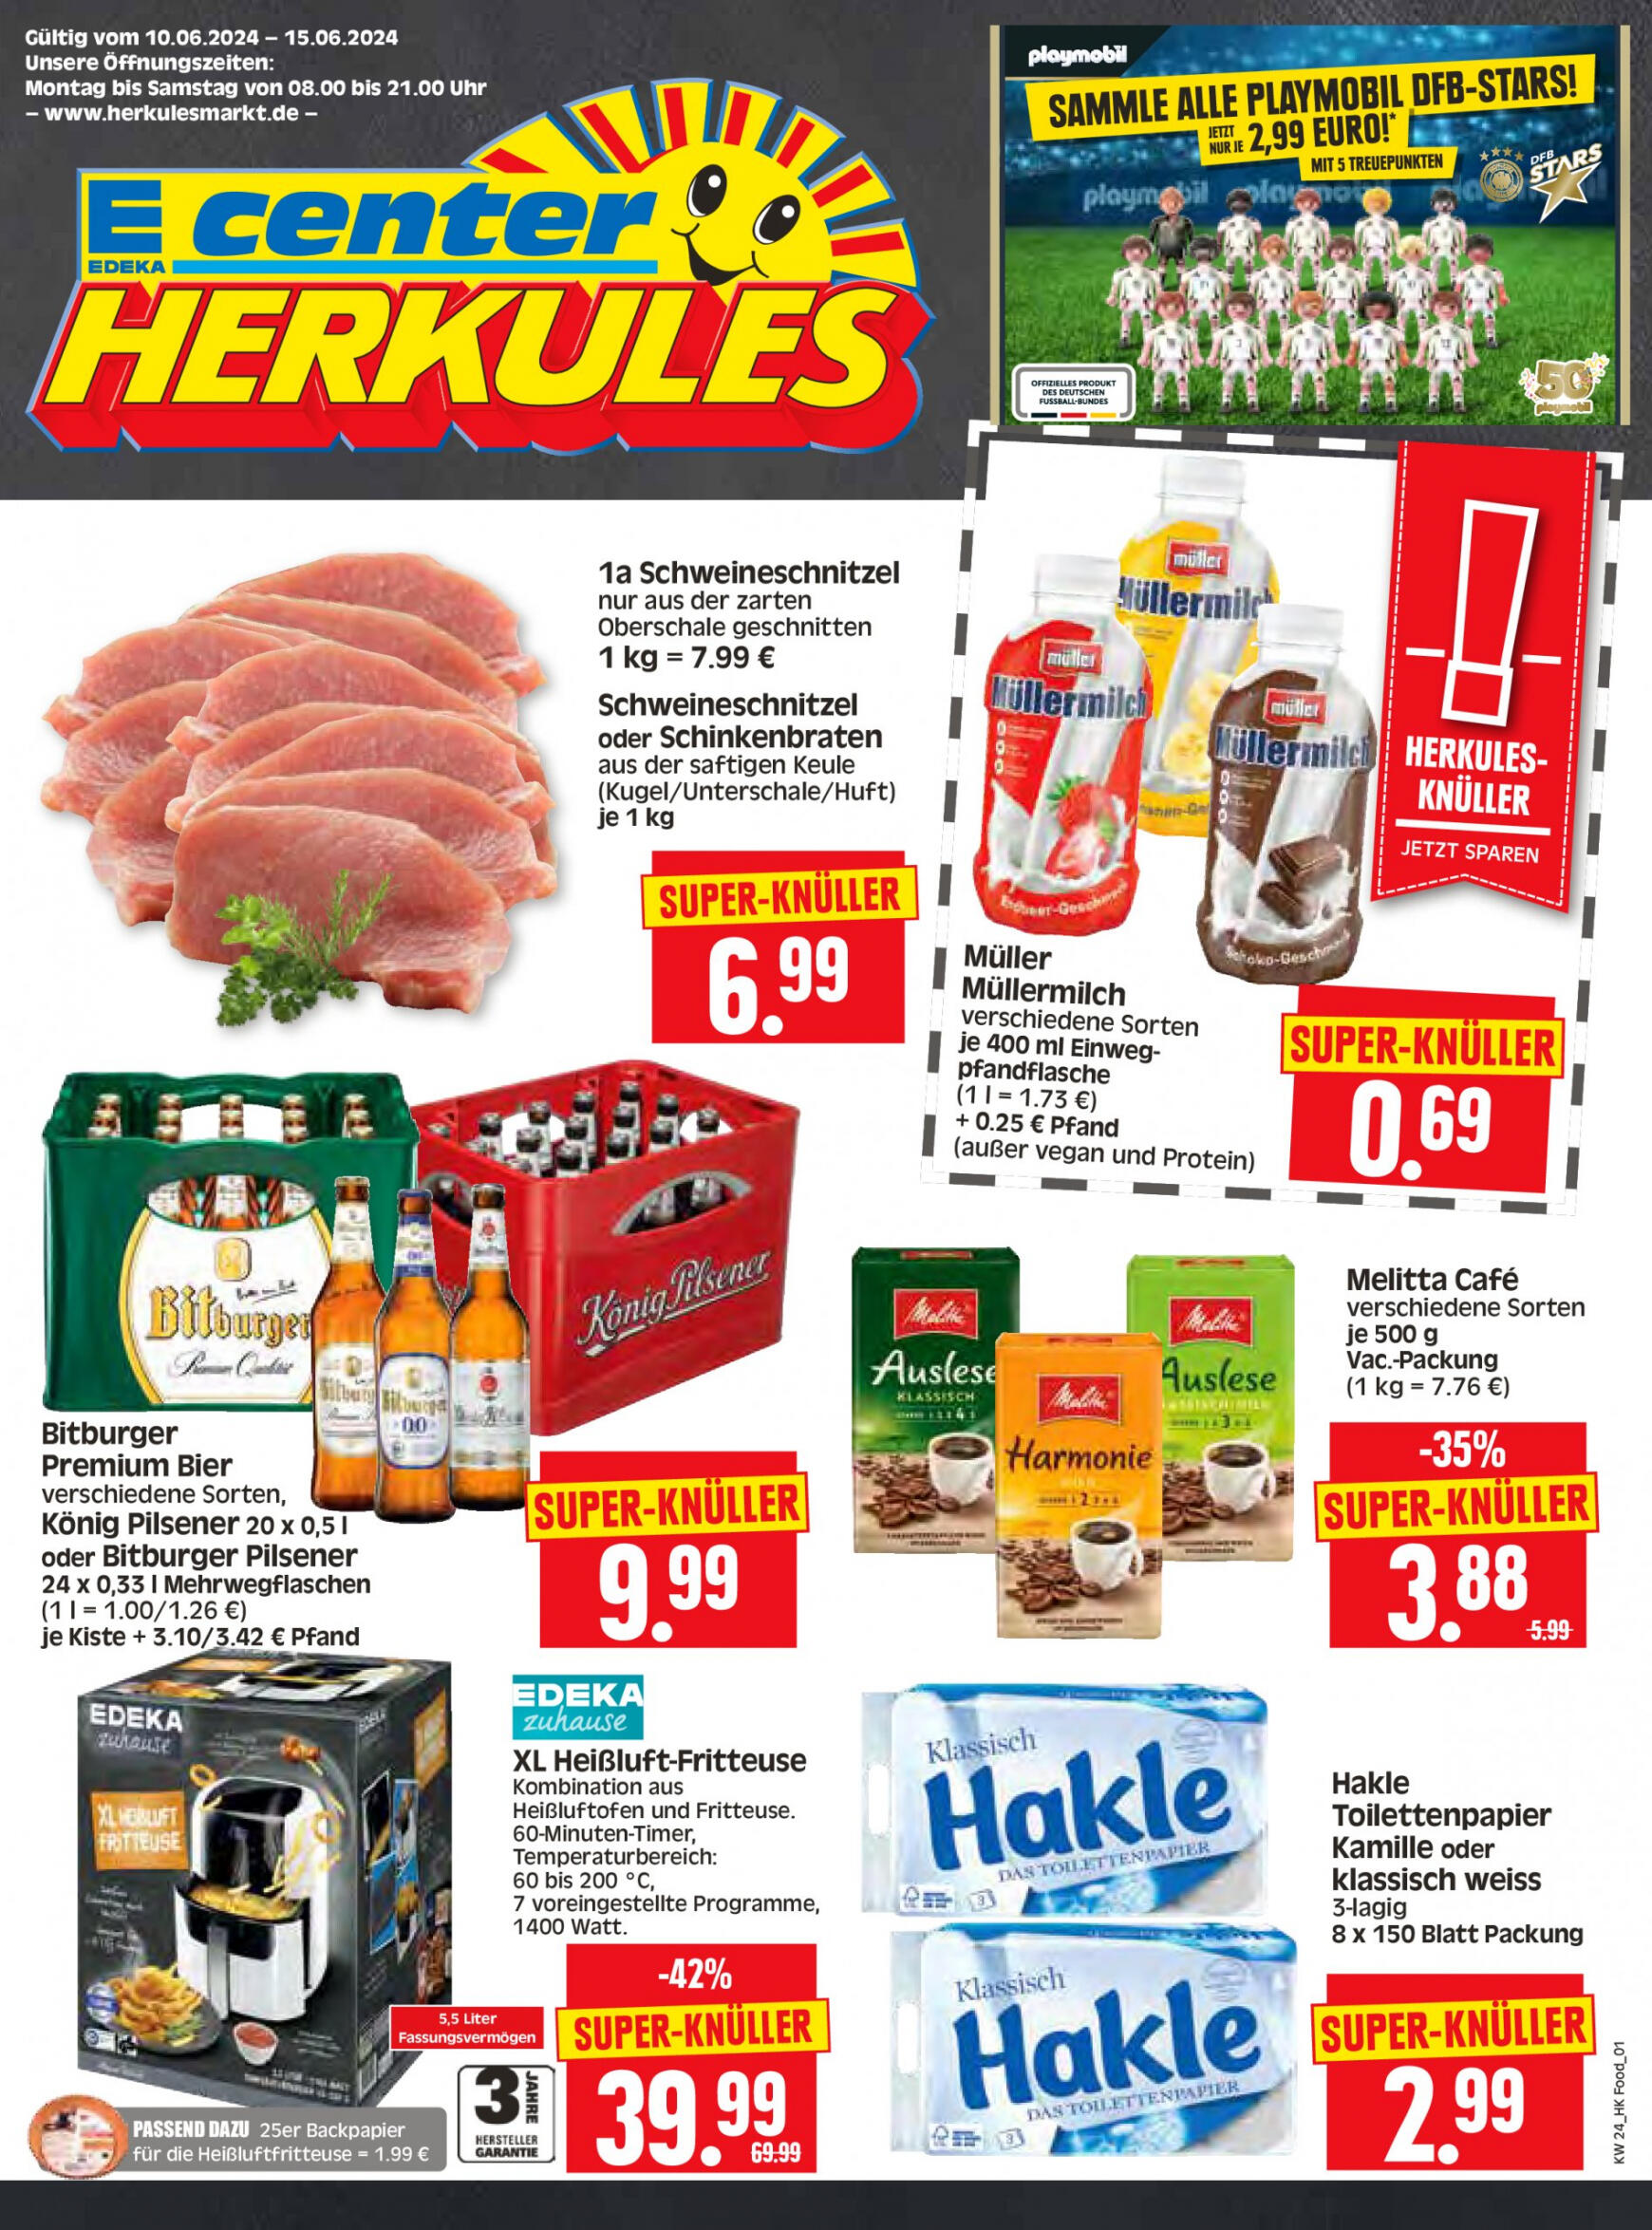 herkules - Flyer Herkules - Lebensmittel aktuell 10.06. - 15.06. - page: 1